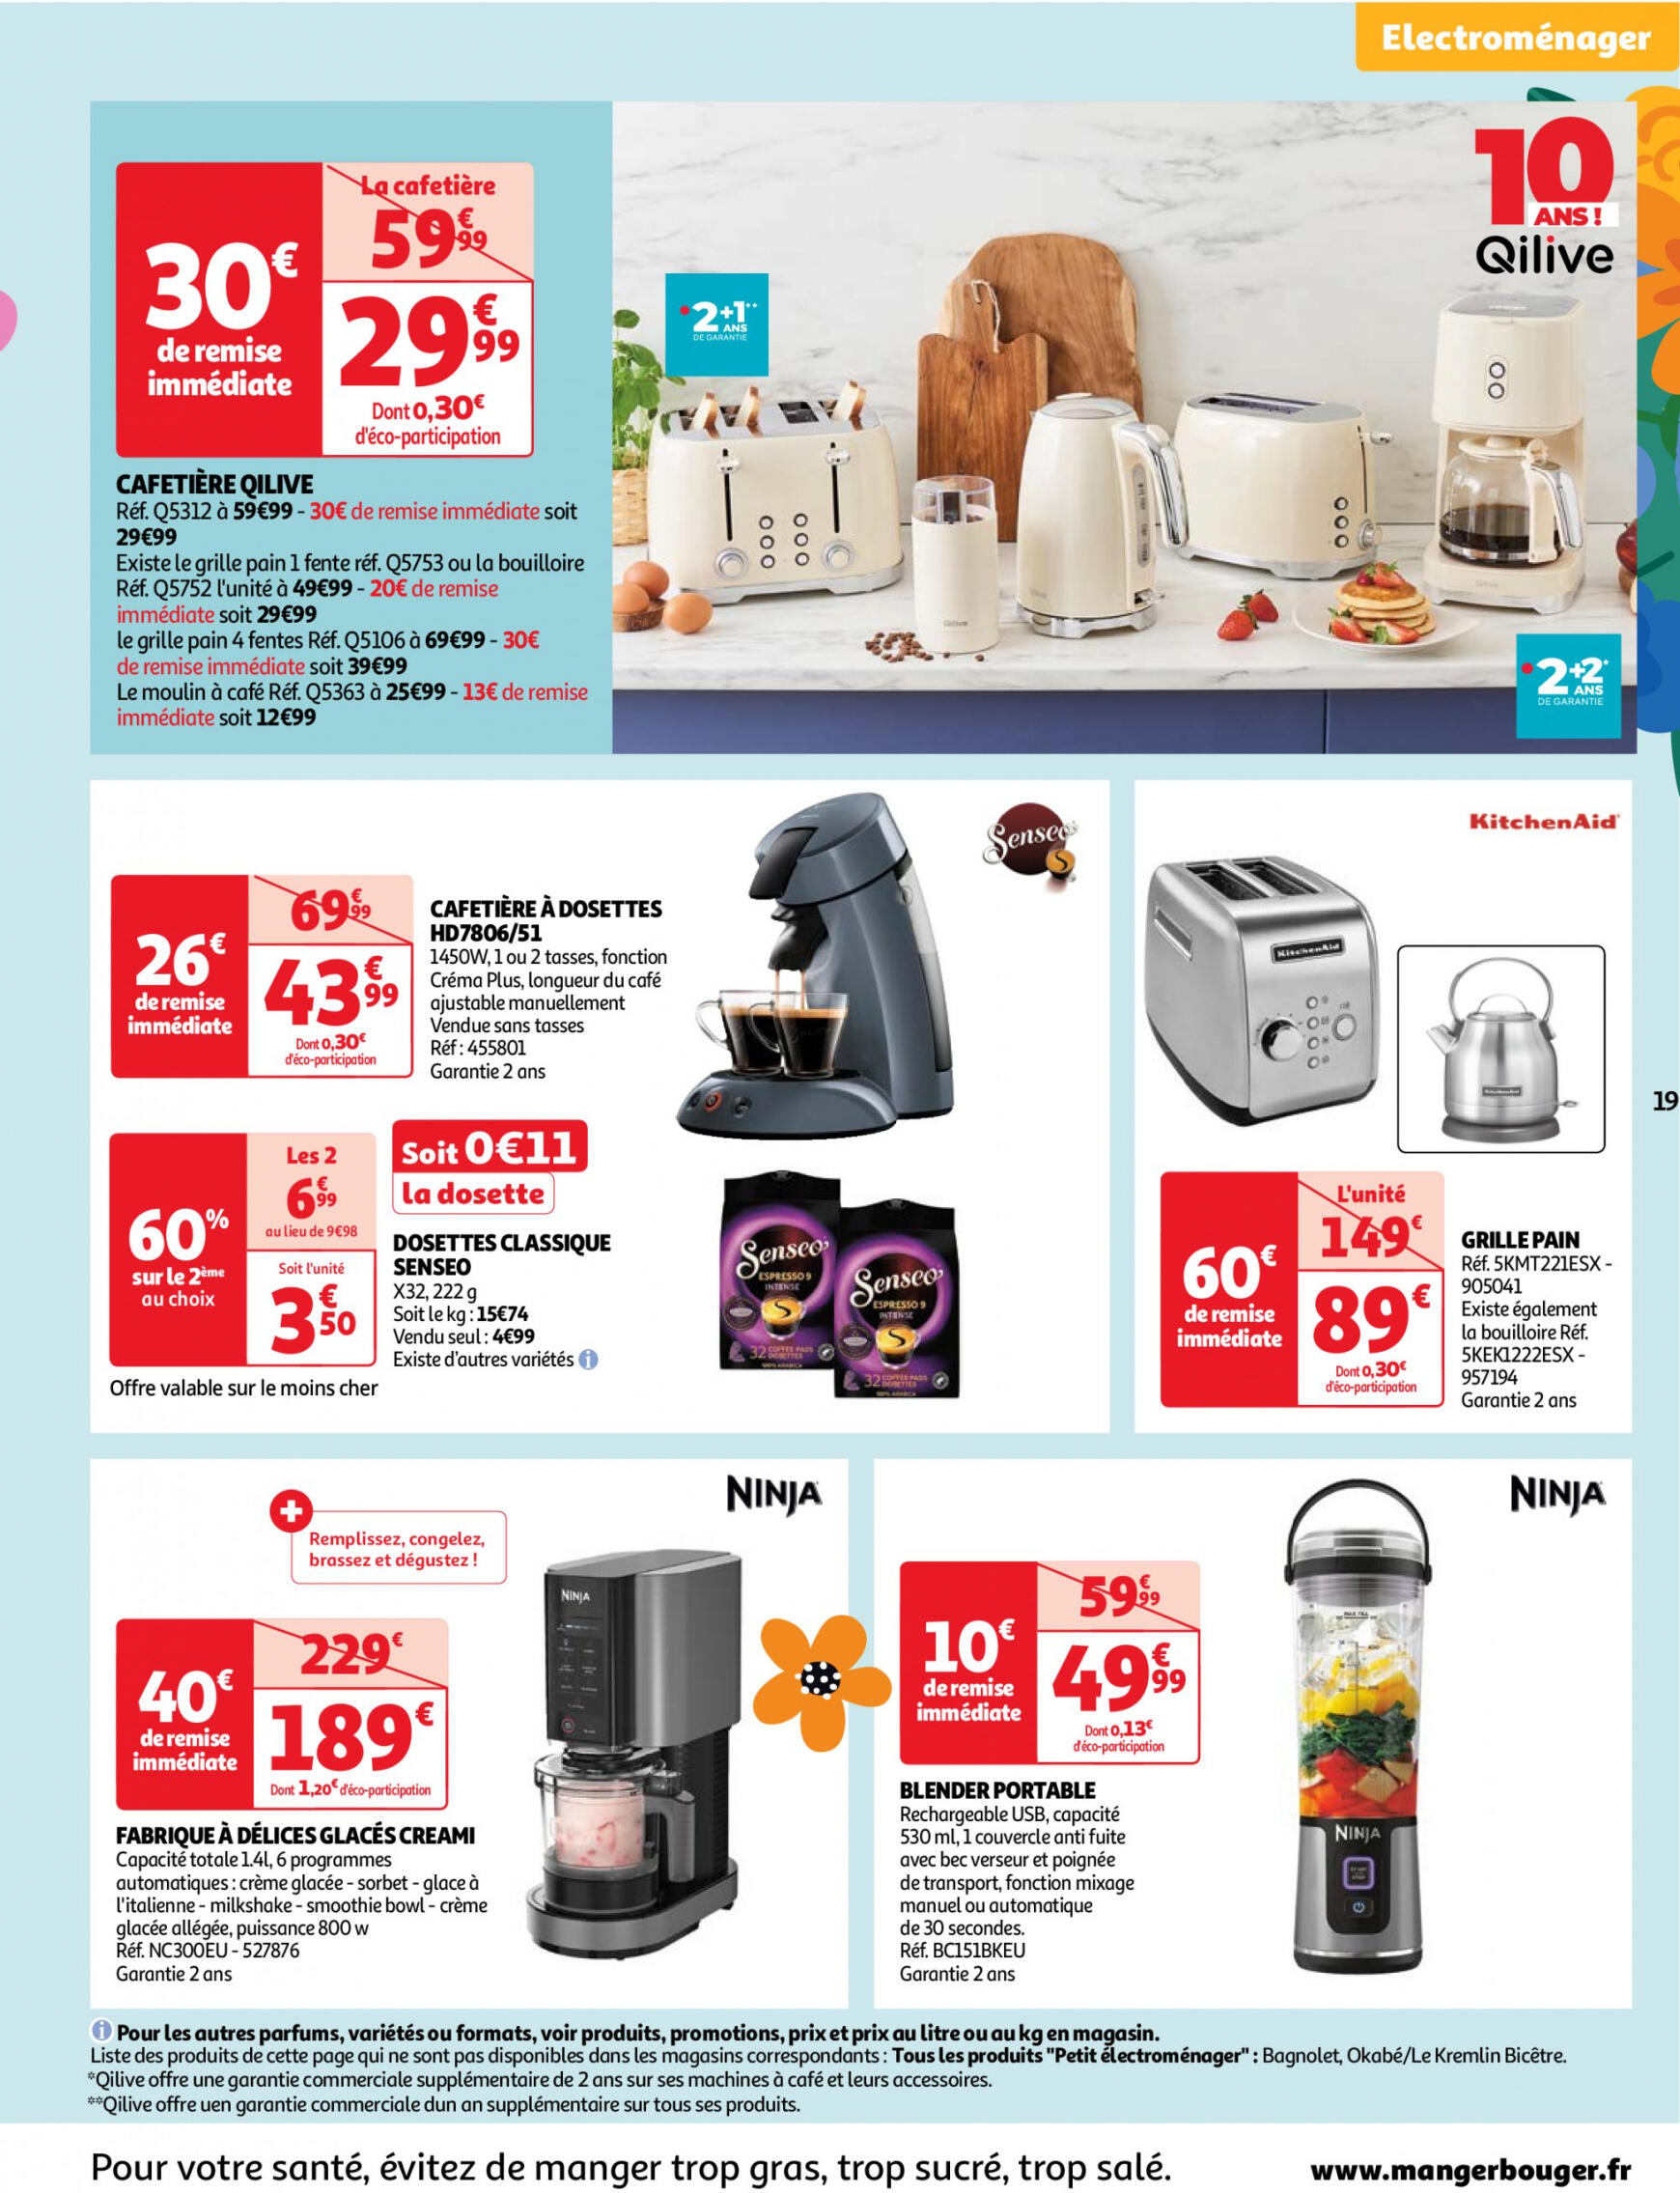 auchan - Prospectus Auchan - Merci maman actuel 14.05. - 26.05. - page: 19